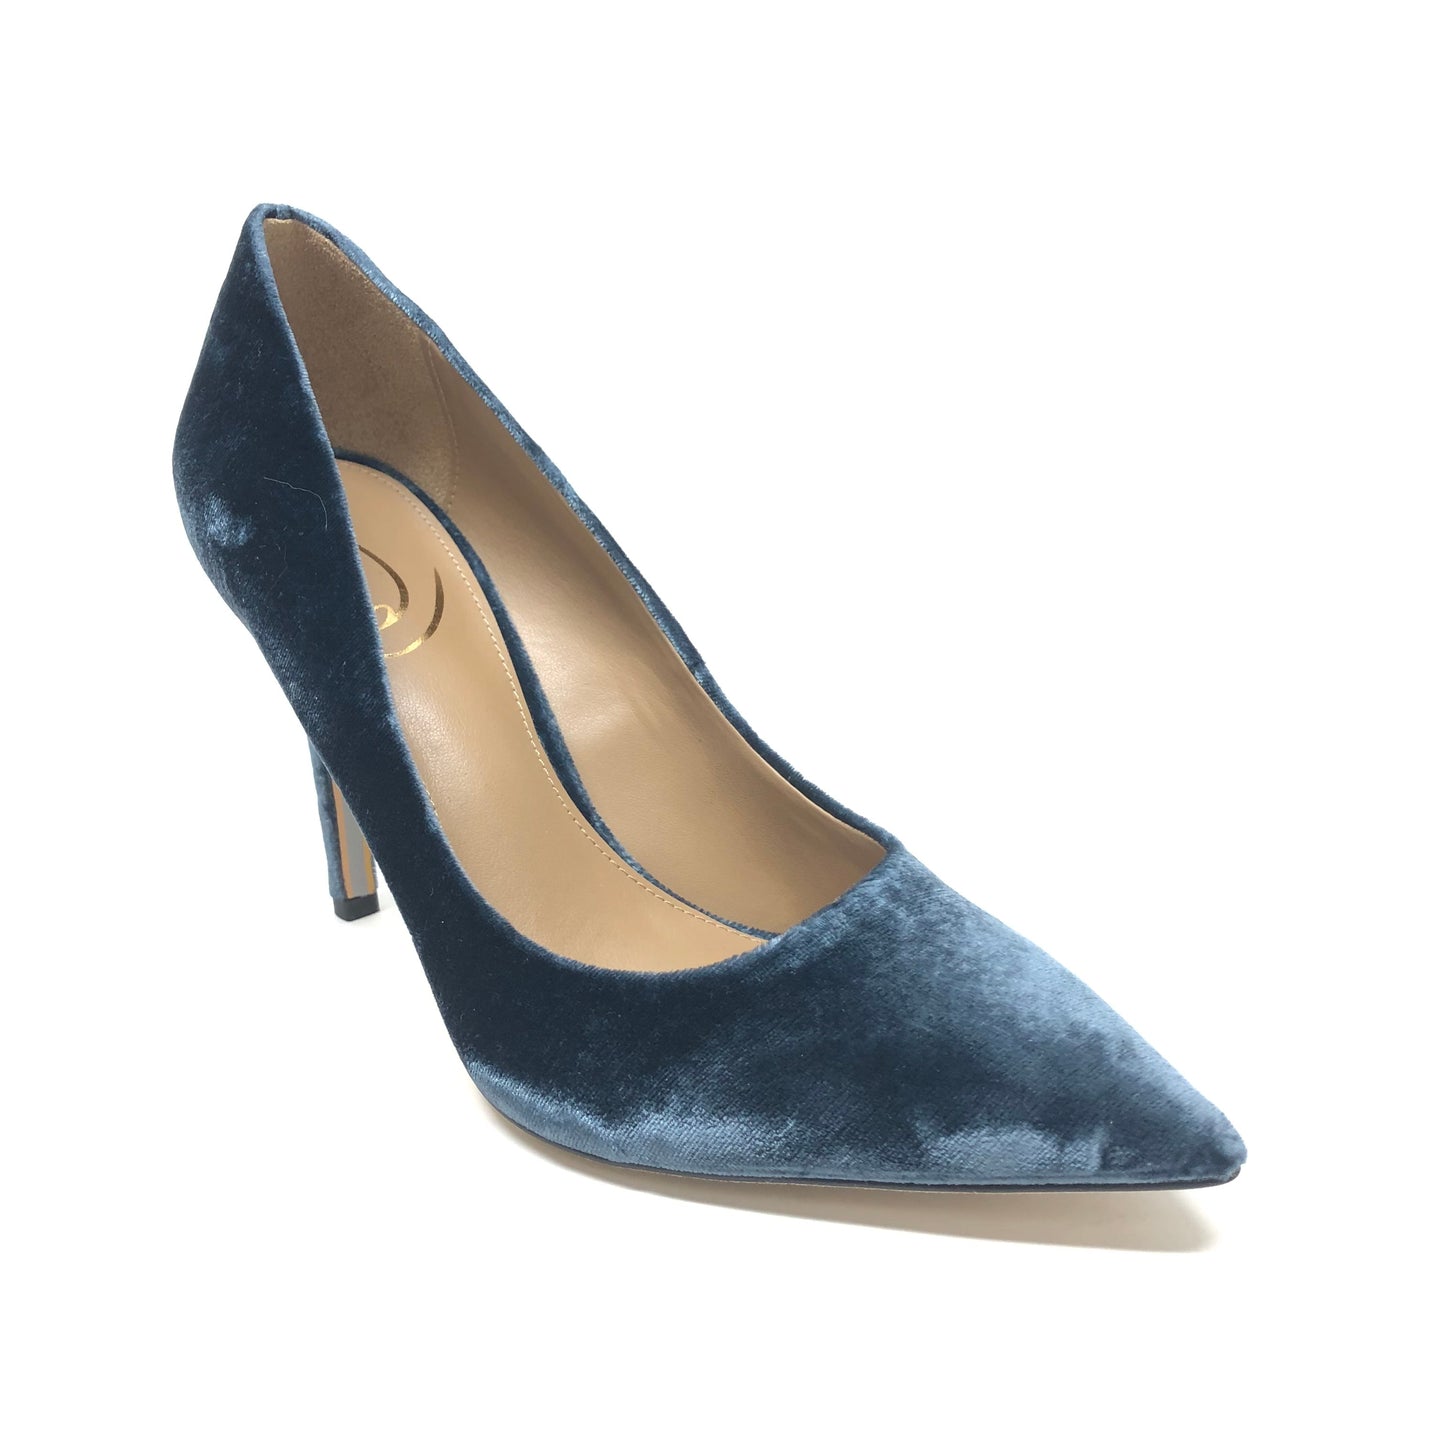 Blue Shoes Heels Stiletto Sam Edelman, Size 7.5